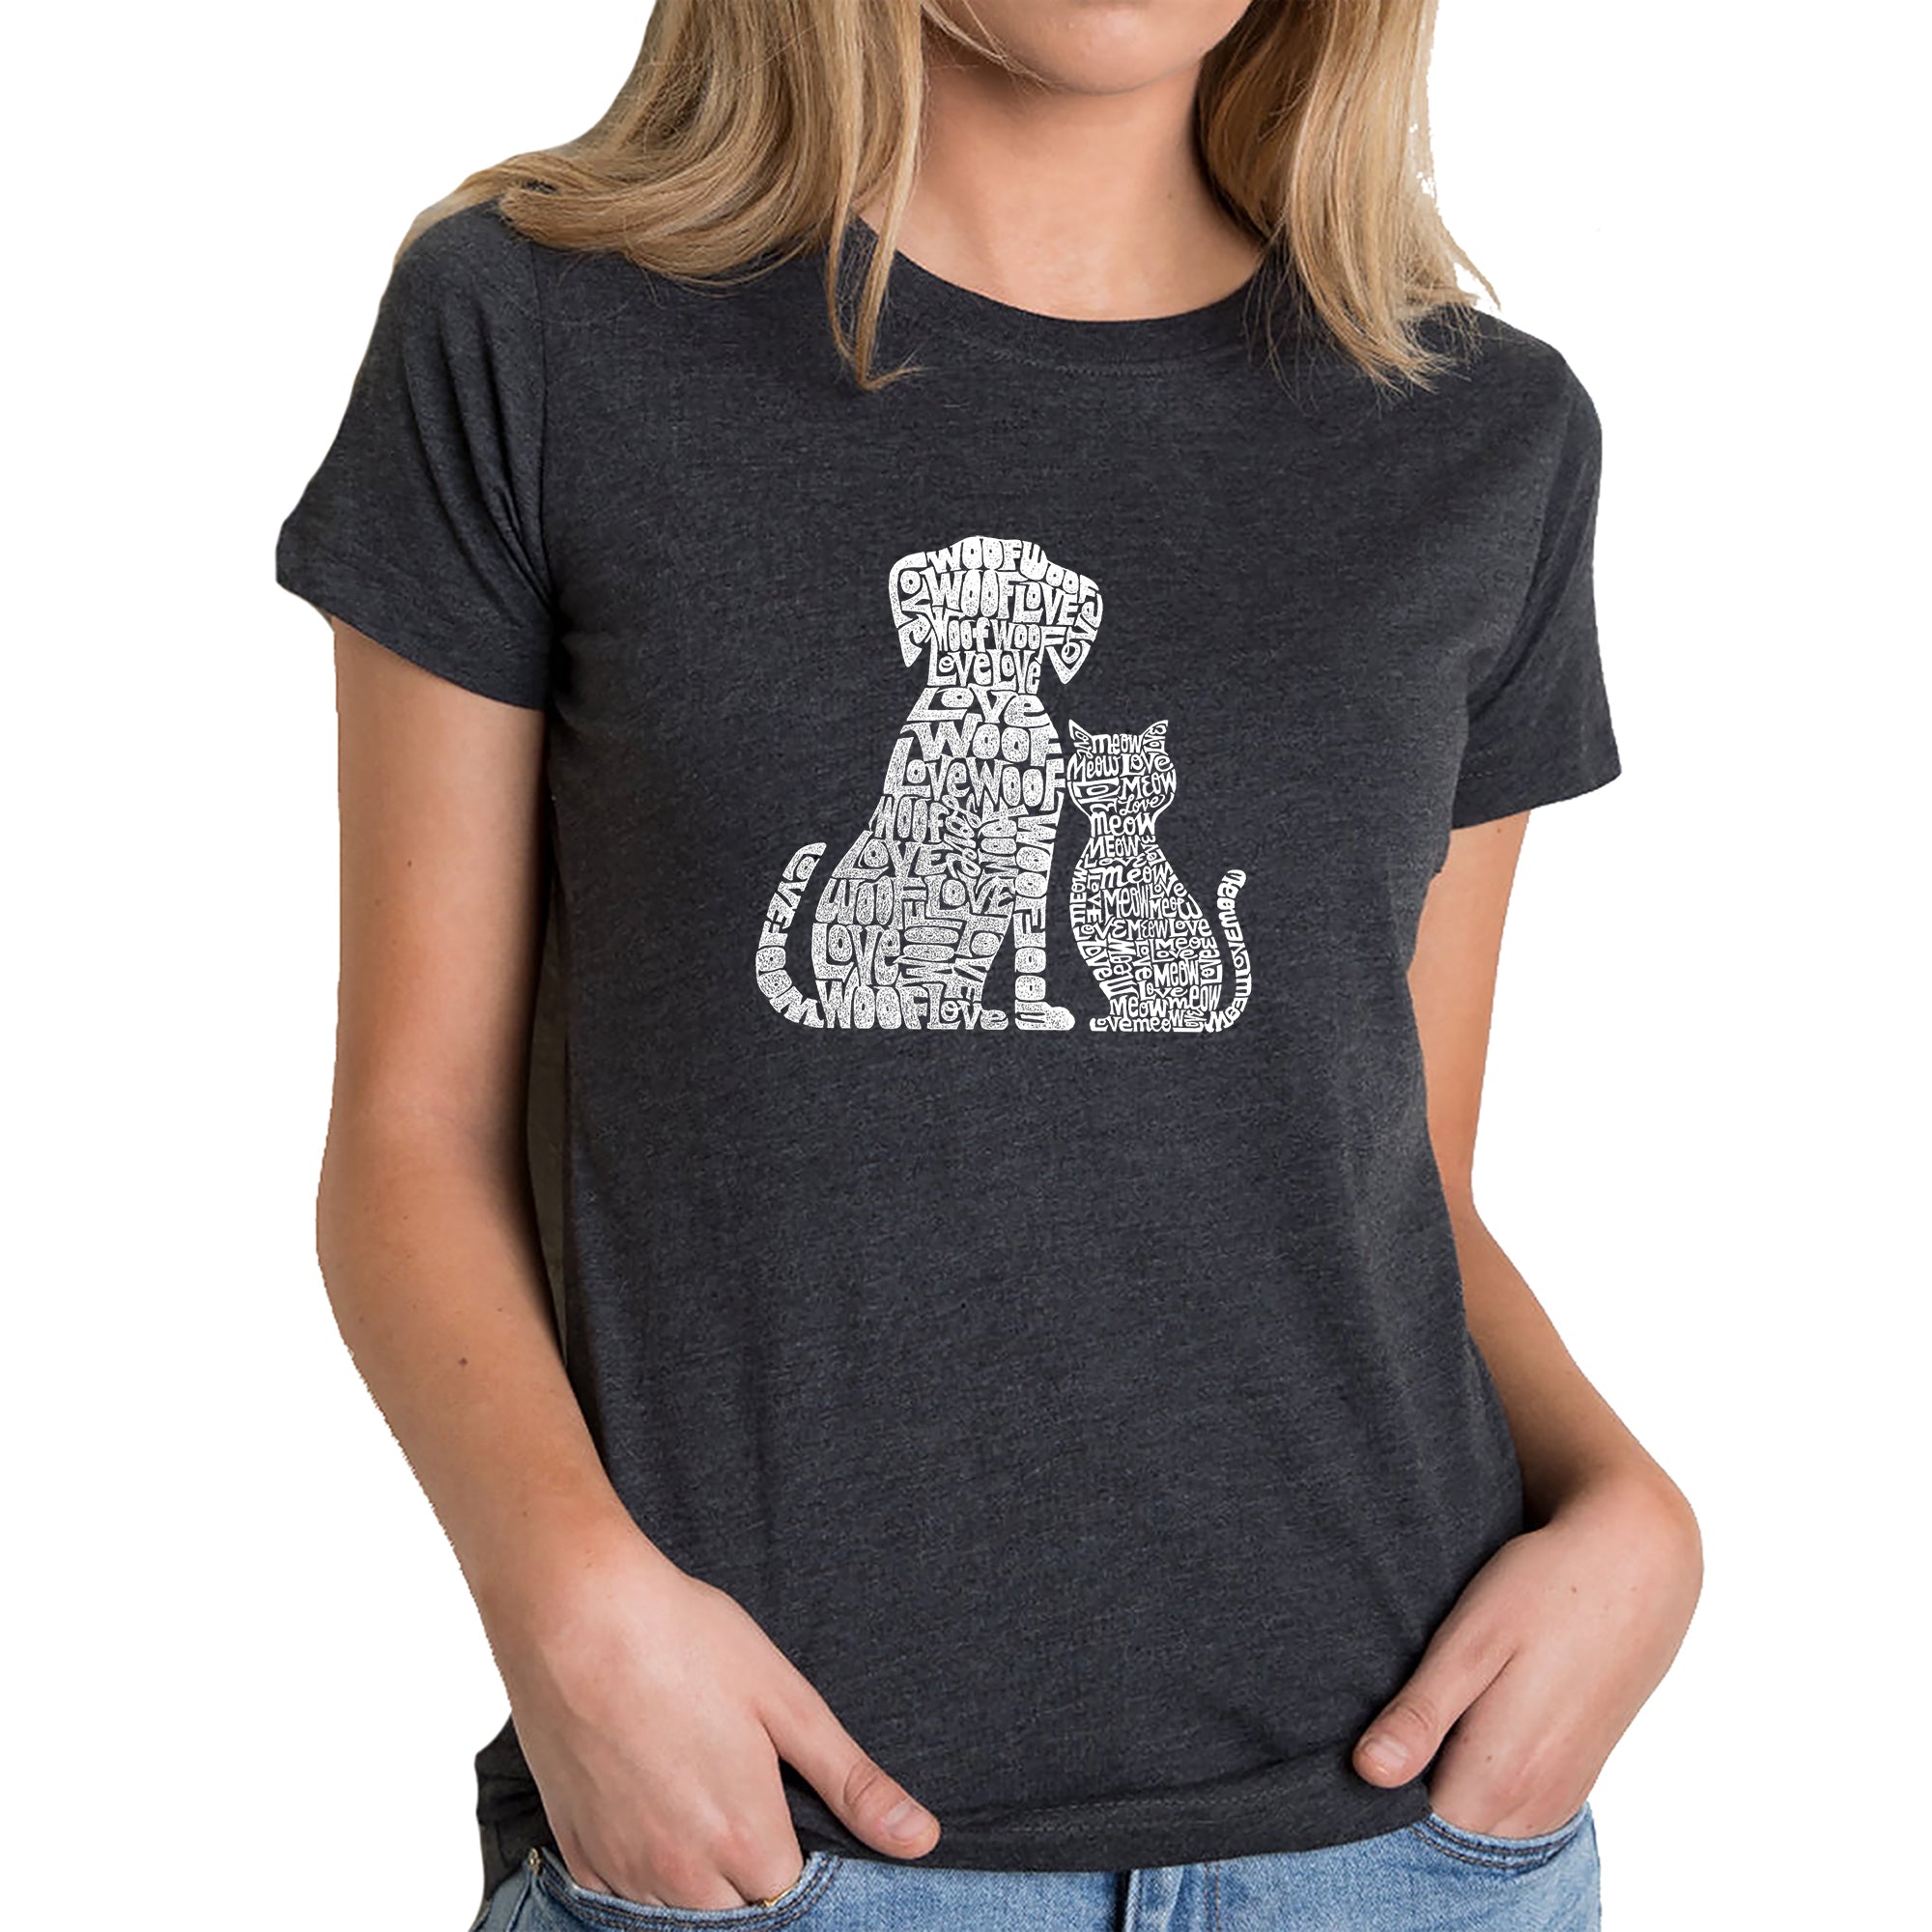 Dogs And Cats - Women's Premium Blend Word Art T-Shirt - Black - XX-Large